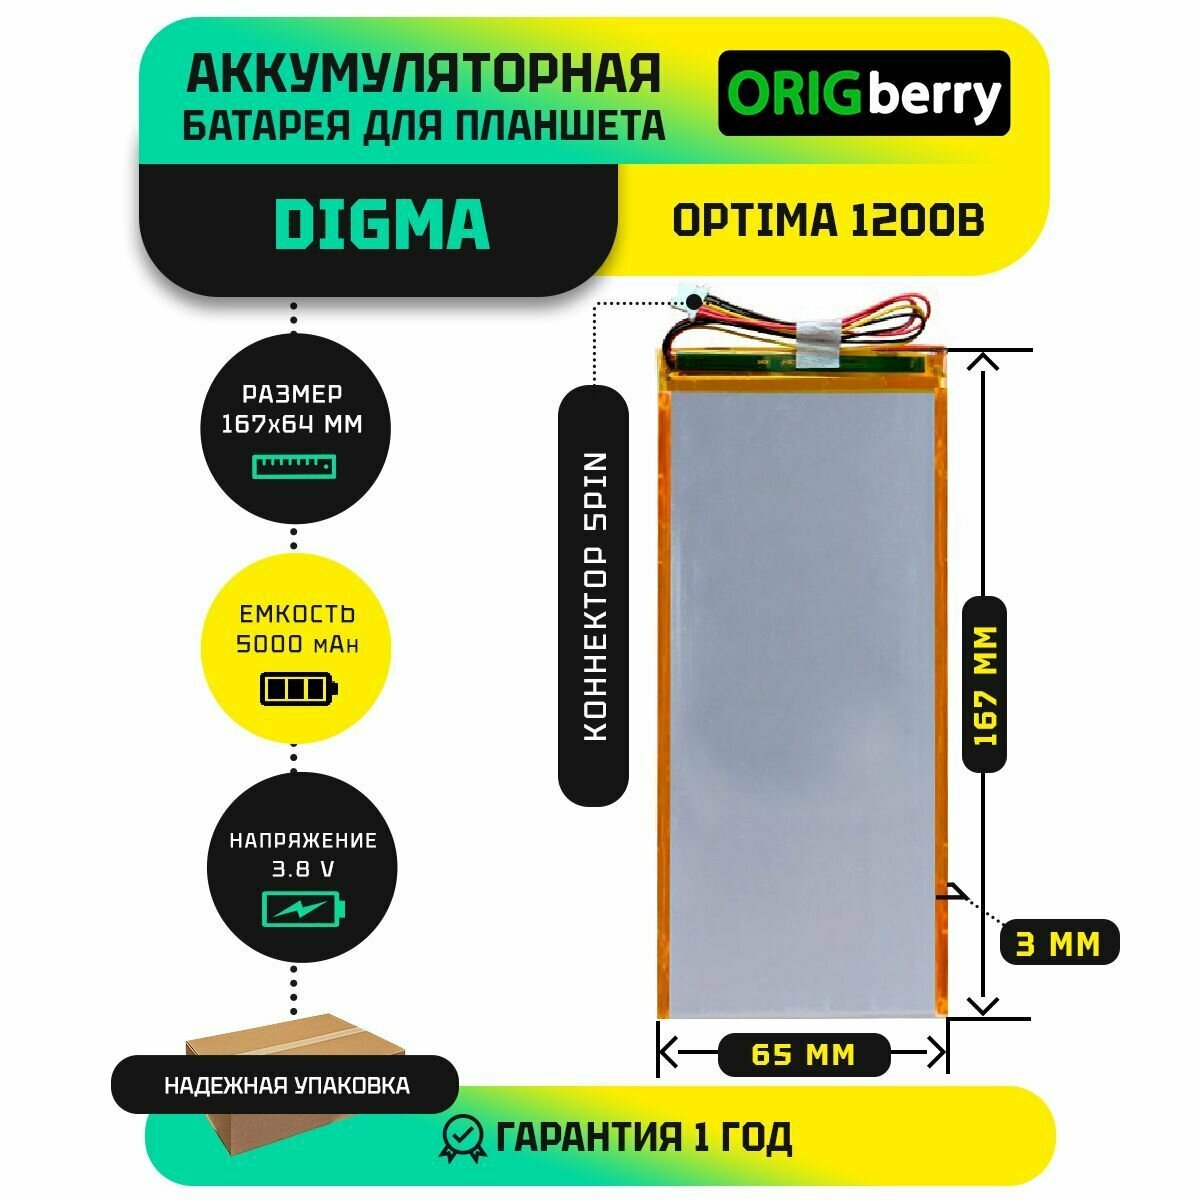 Аккумулятор для планшета Digma Optima 1200B 3,8 V / 5000 mAh / 167мм x 65мм / коннектор 5 PIN